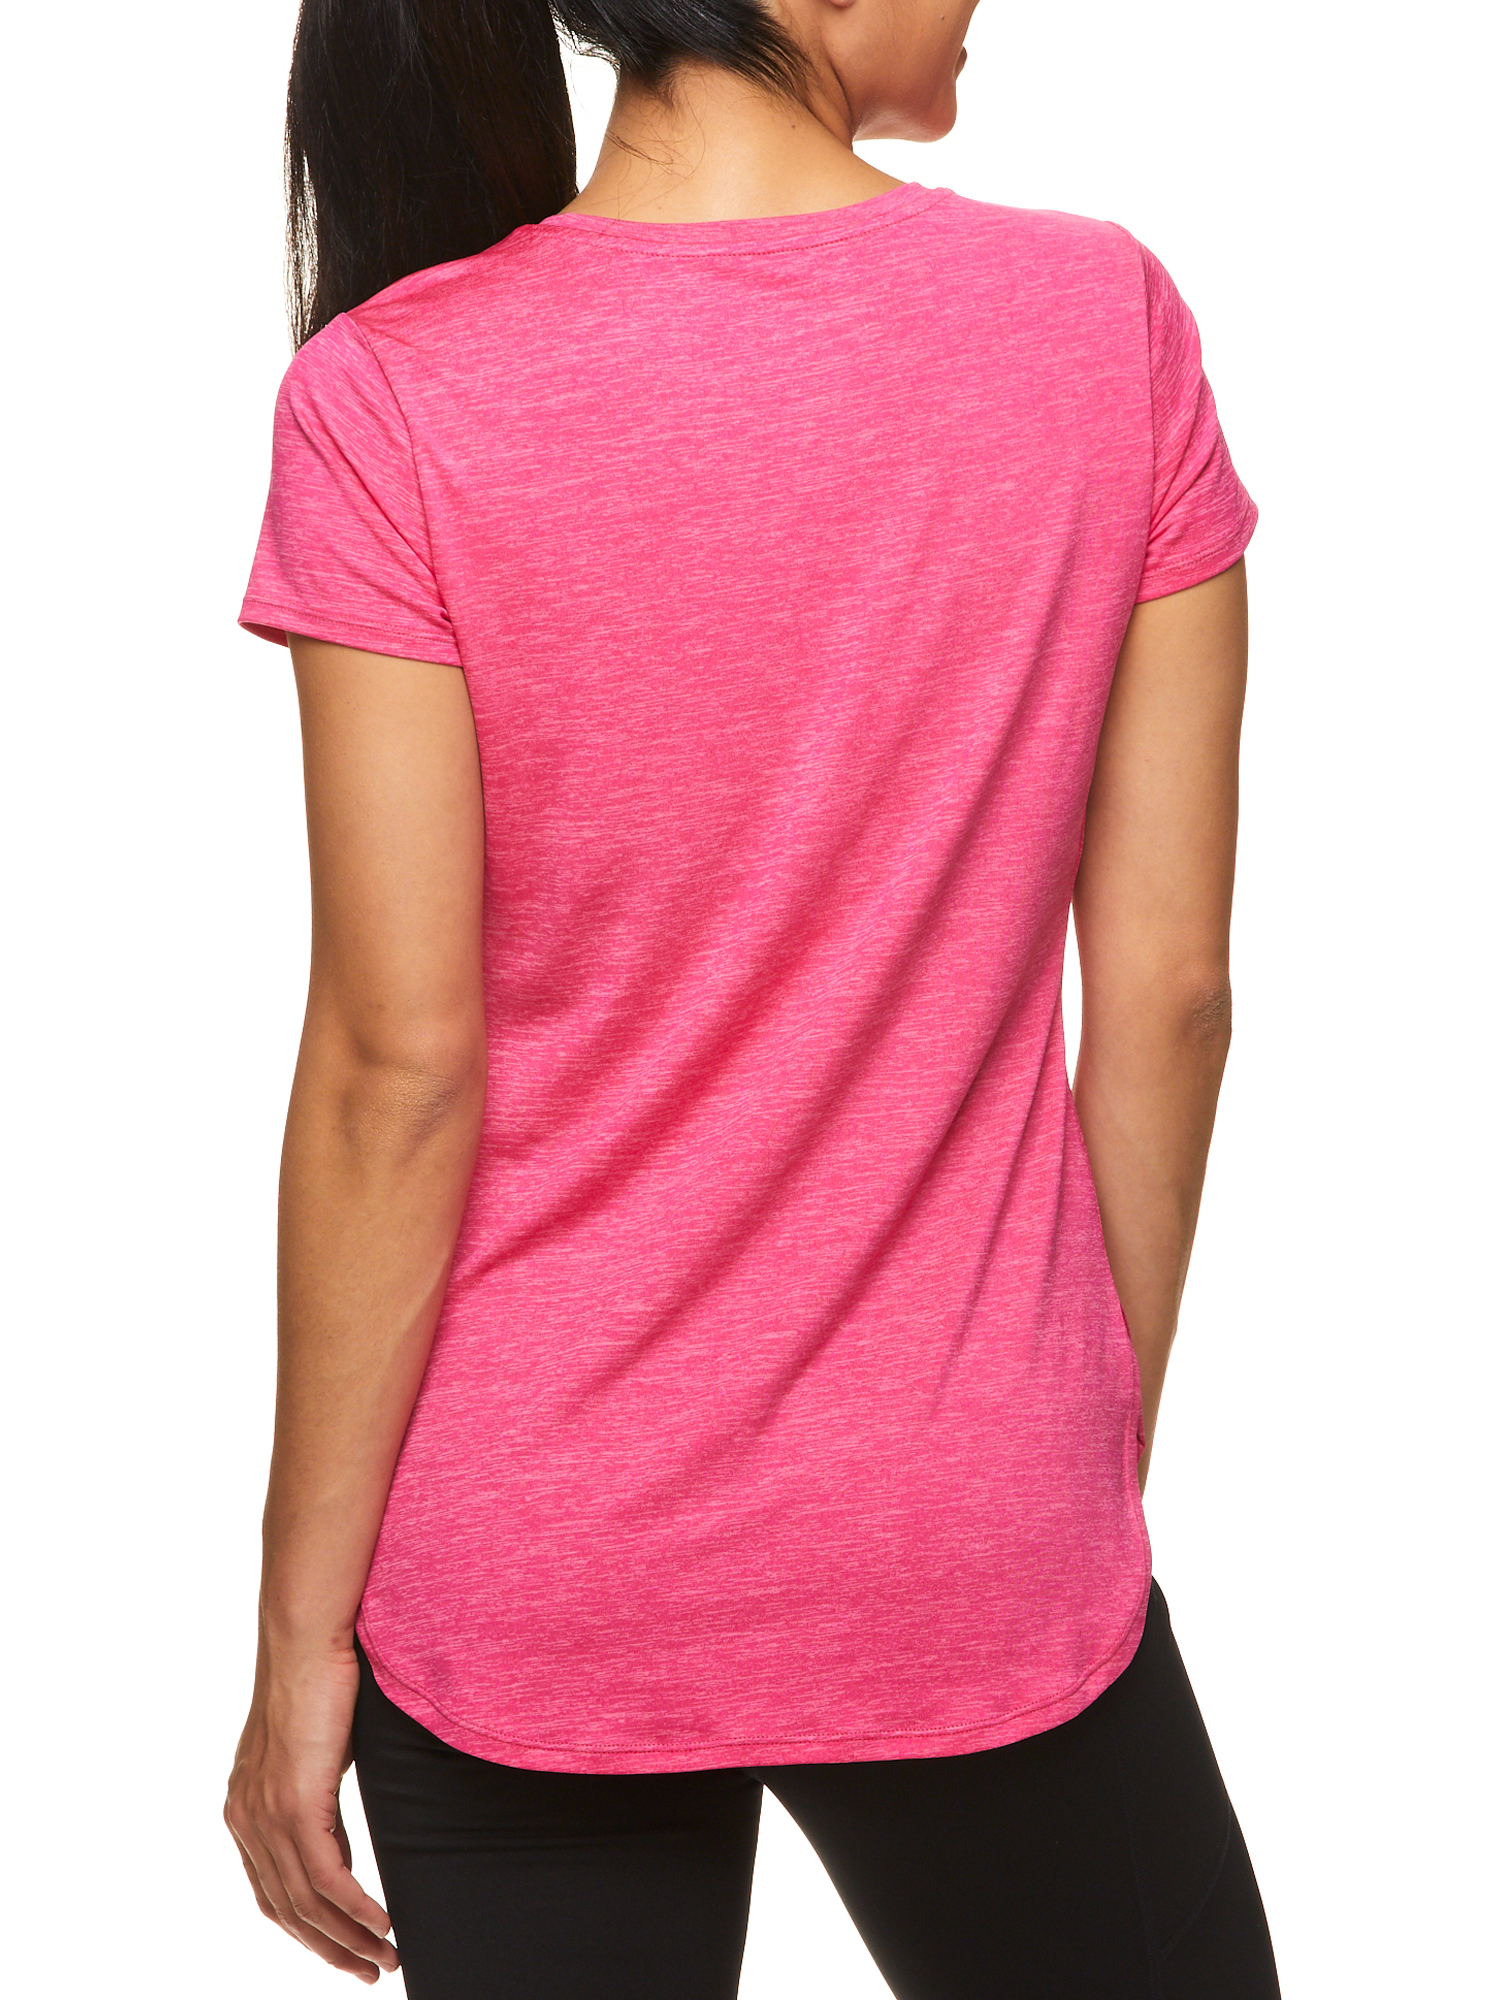 Reebok Women's Graphic Short Sleeve T-Shirt - image 3 of 4